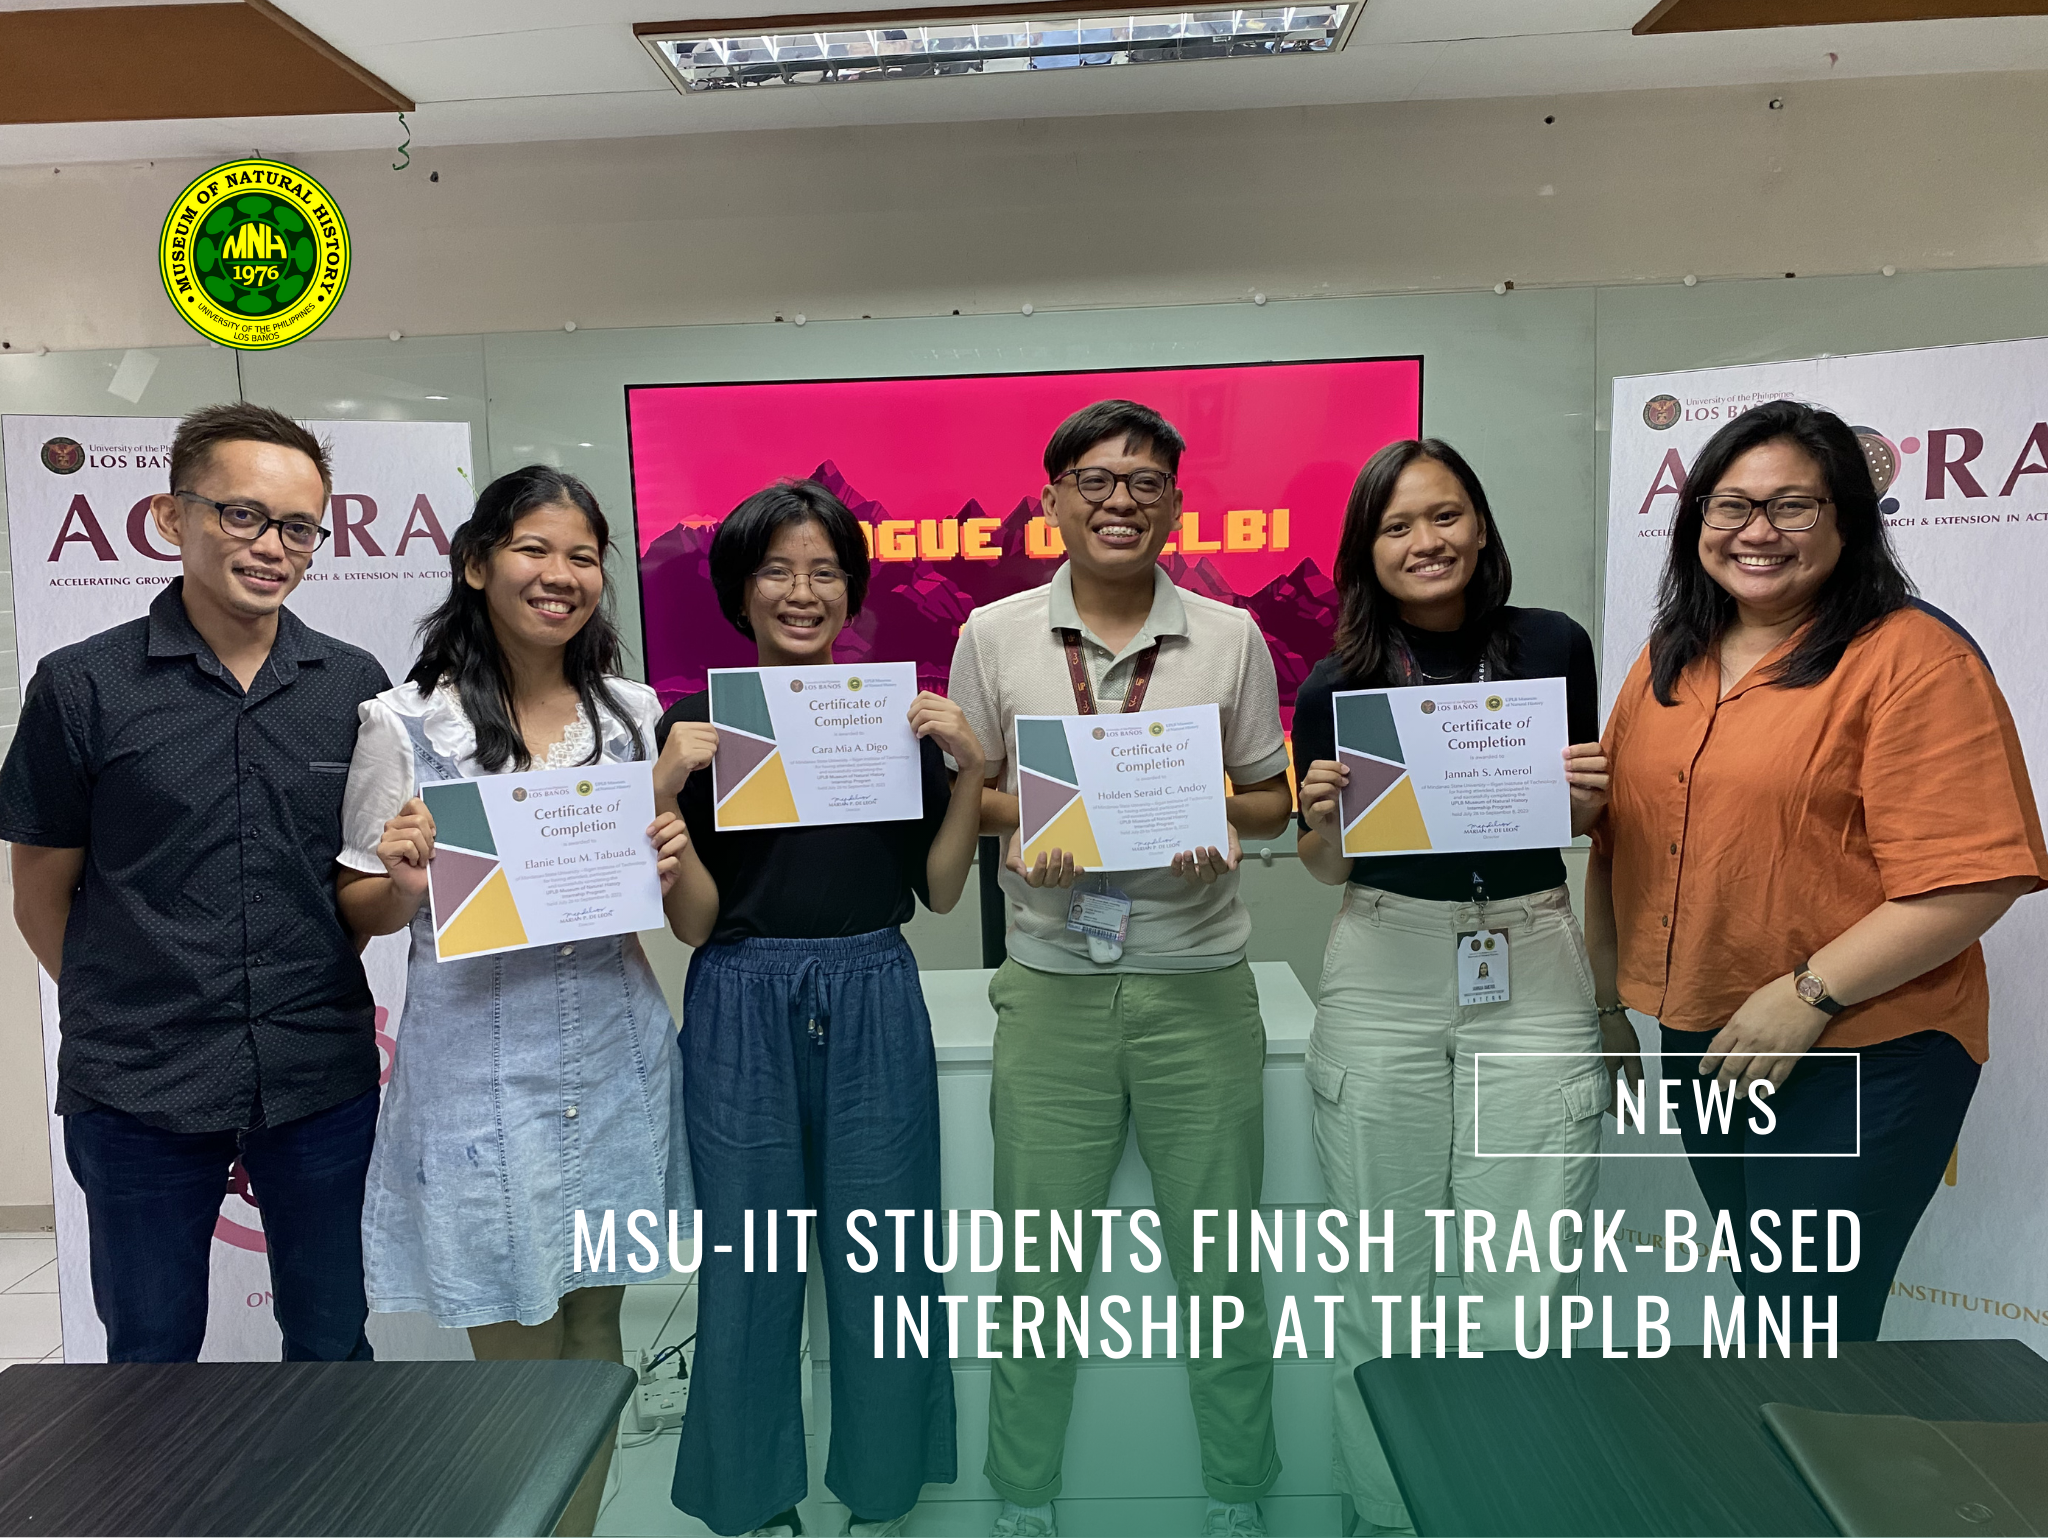 MSU-IIT students finish track-based internship at the UPLB MNH